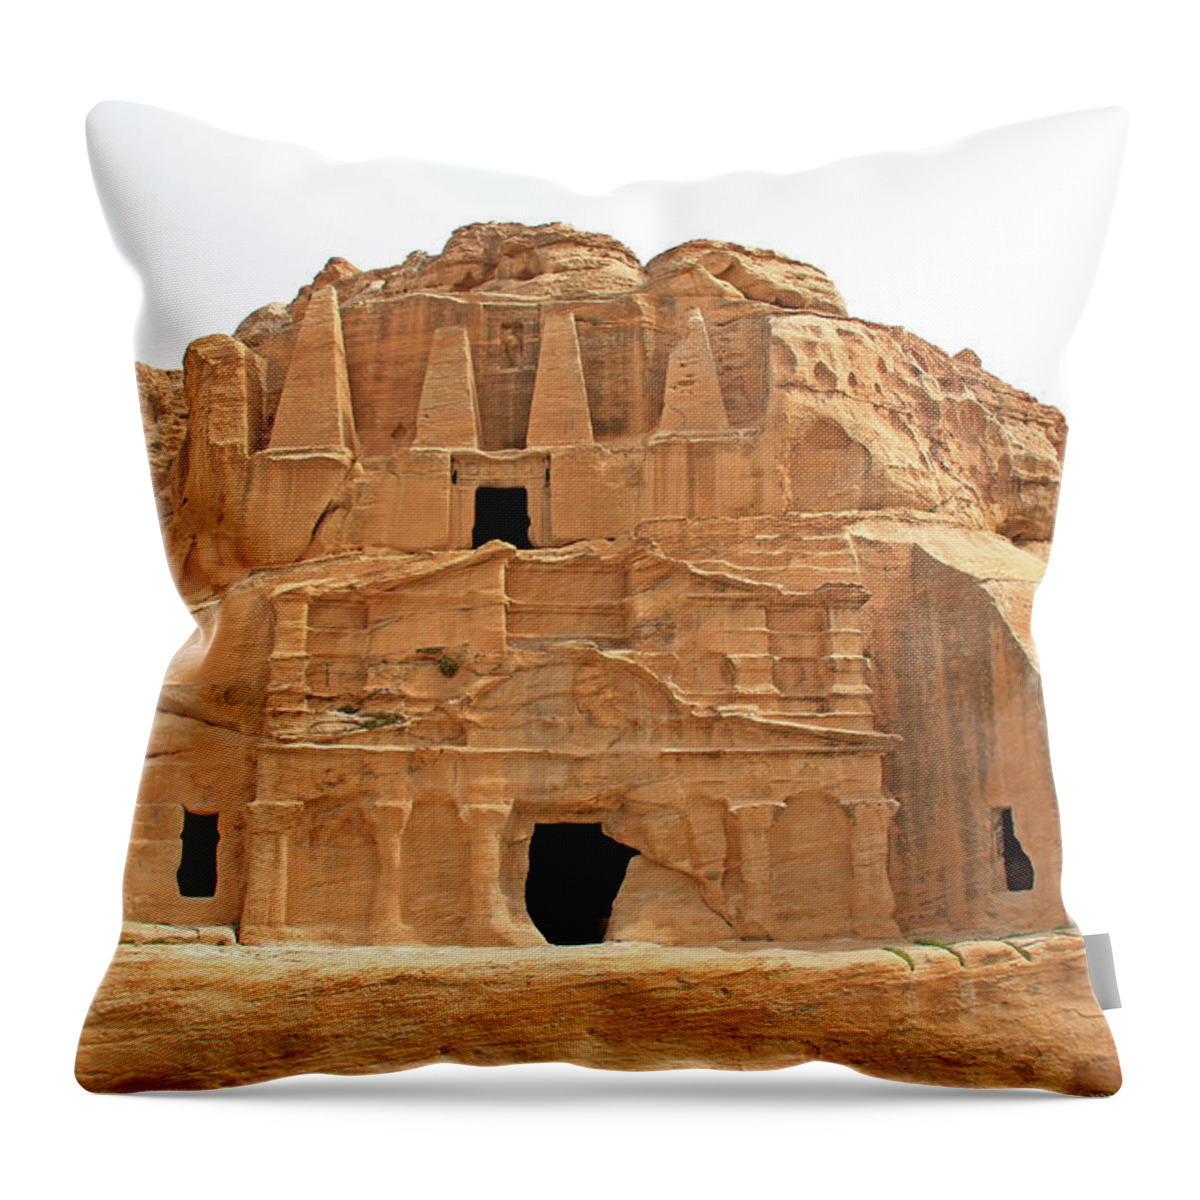 Petra Throw Pillow featuring the photograph Petra, Jordan - Cave Dwellings by Richard Krebs